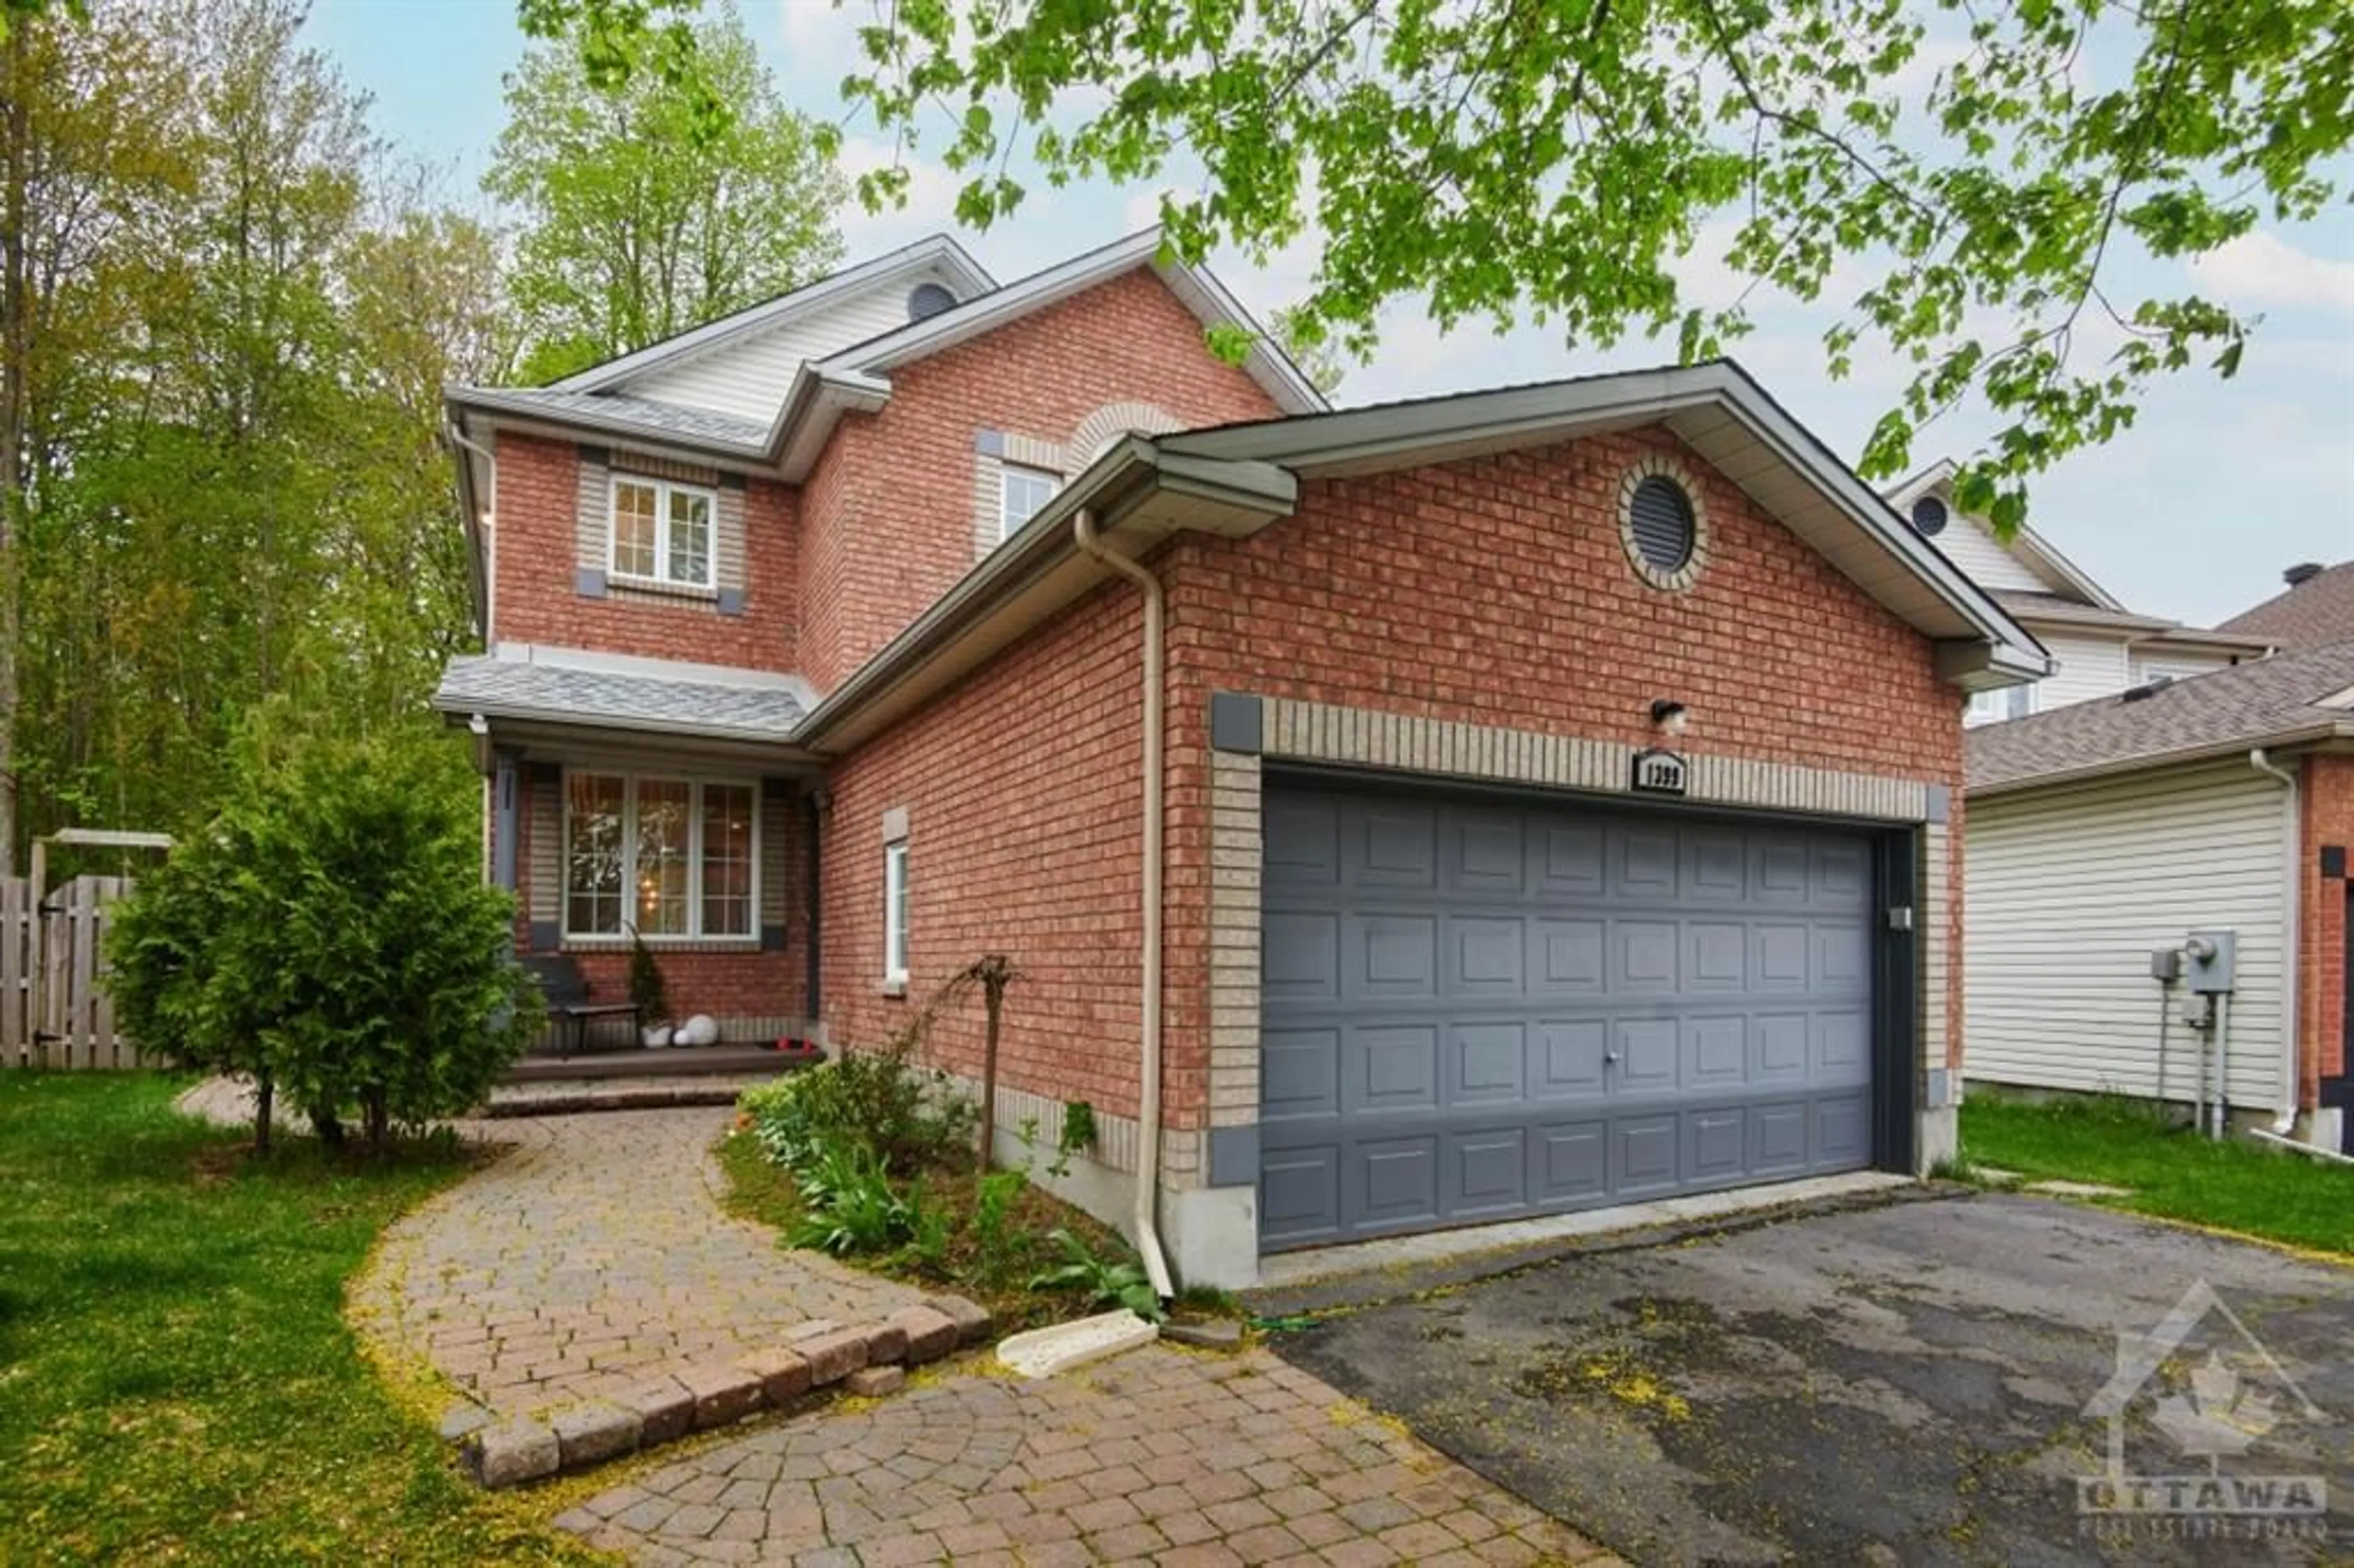 Home with brick exterior material for 1399 TREATY Crt, Ottawa Ontario K1J 1E7